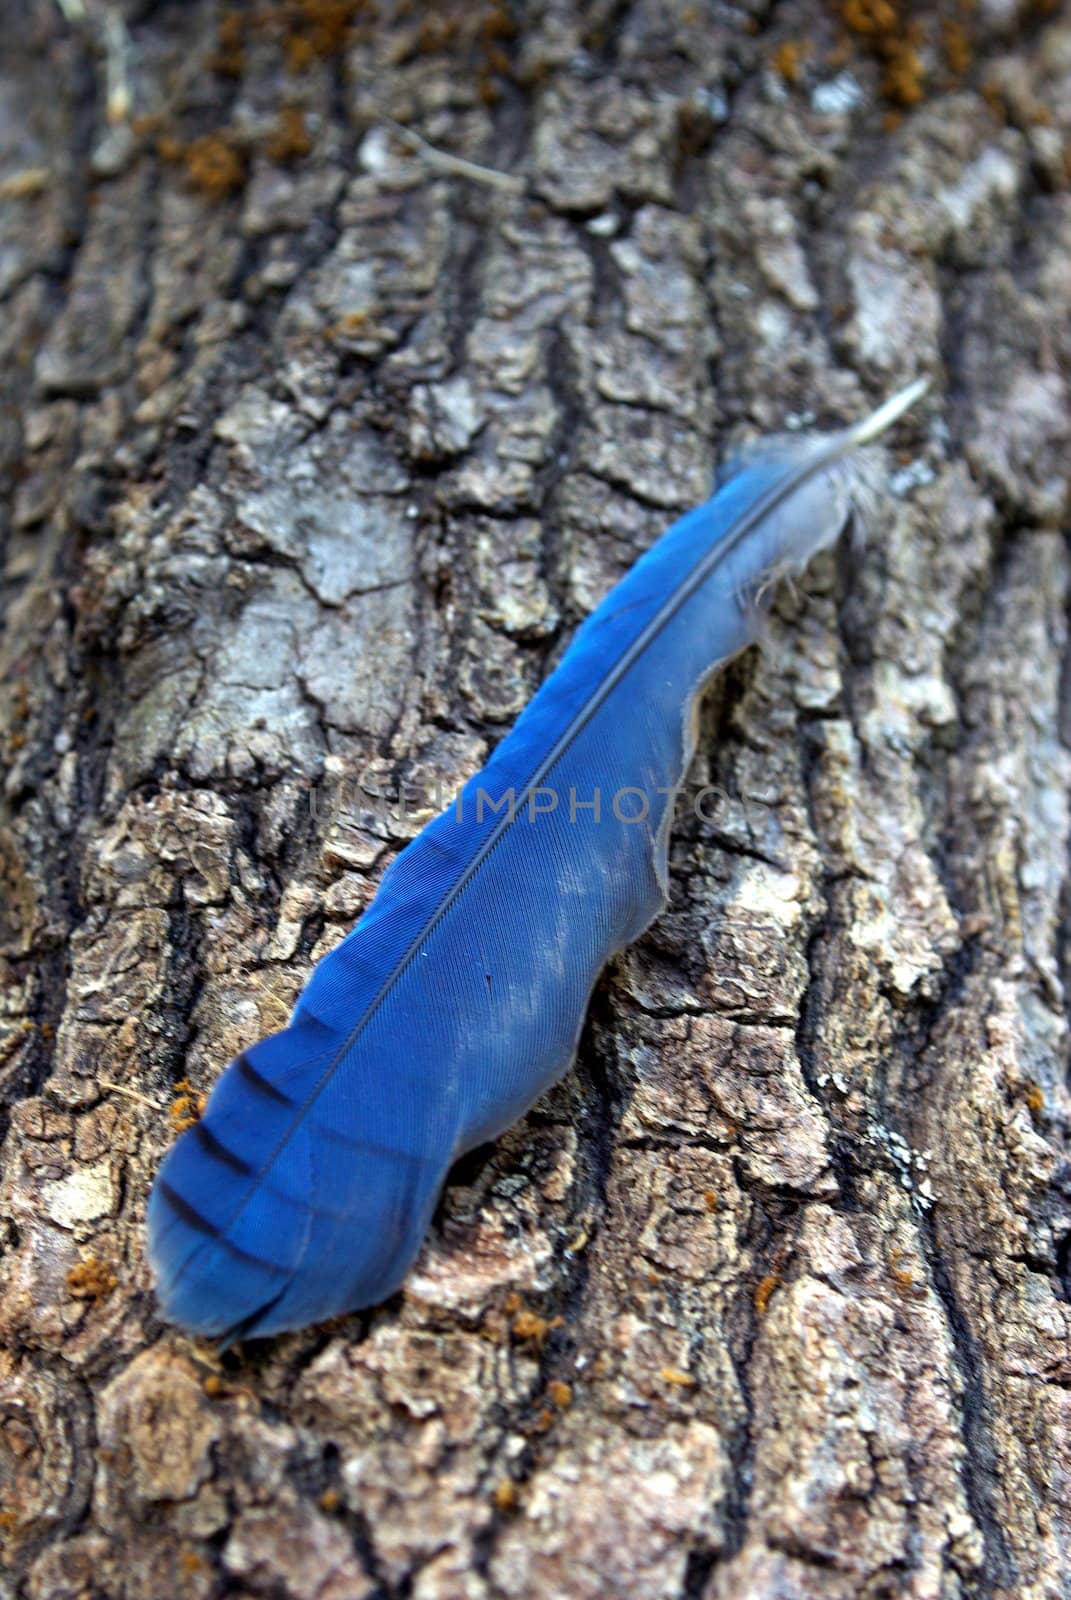 A California Stellar Jay feather laying on an Oak tree branch.